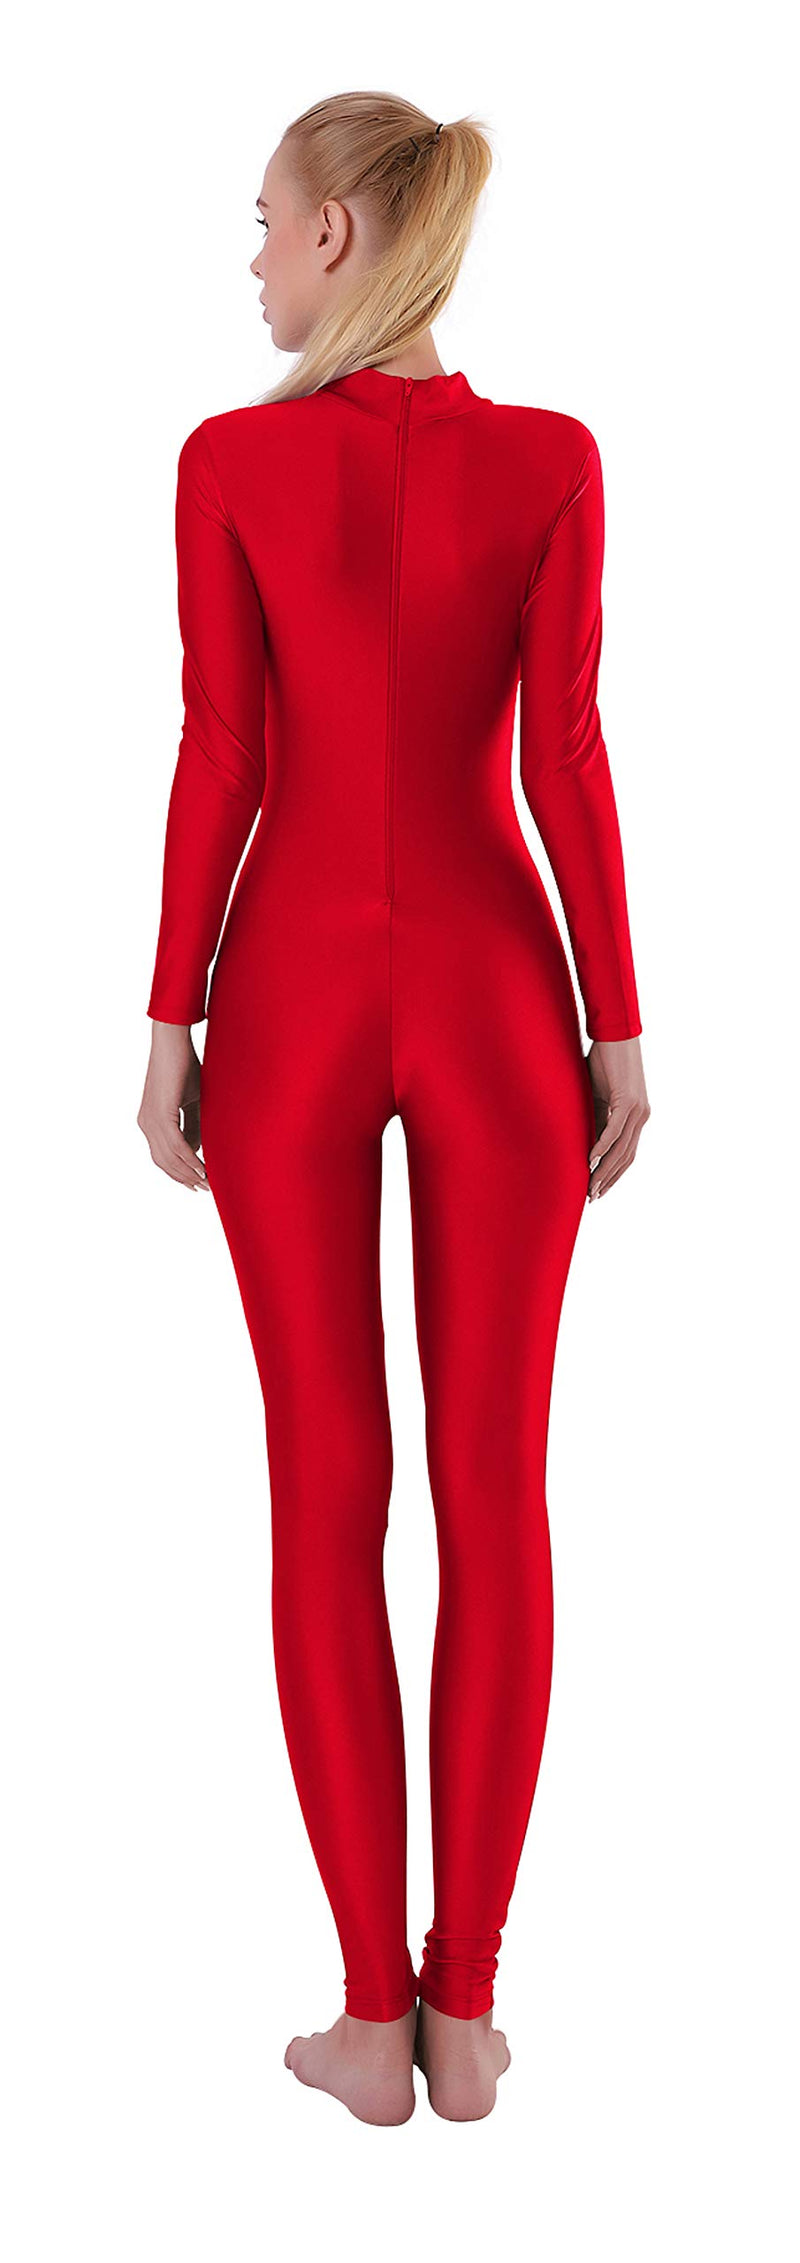 [AUSTRALIA] - Kepblom Womens Turtleneck Long Sleeve Dance Unitard One Piece Full Bodysuit Costumes Red Small 